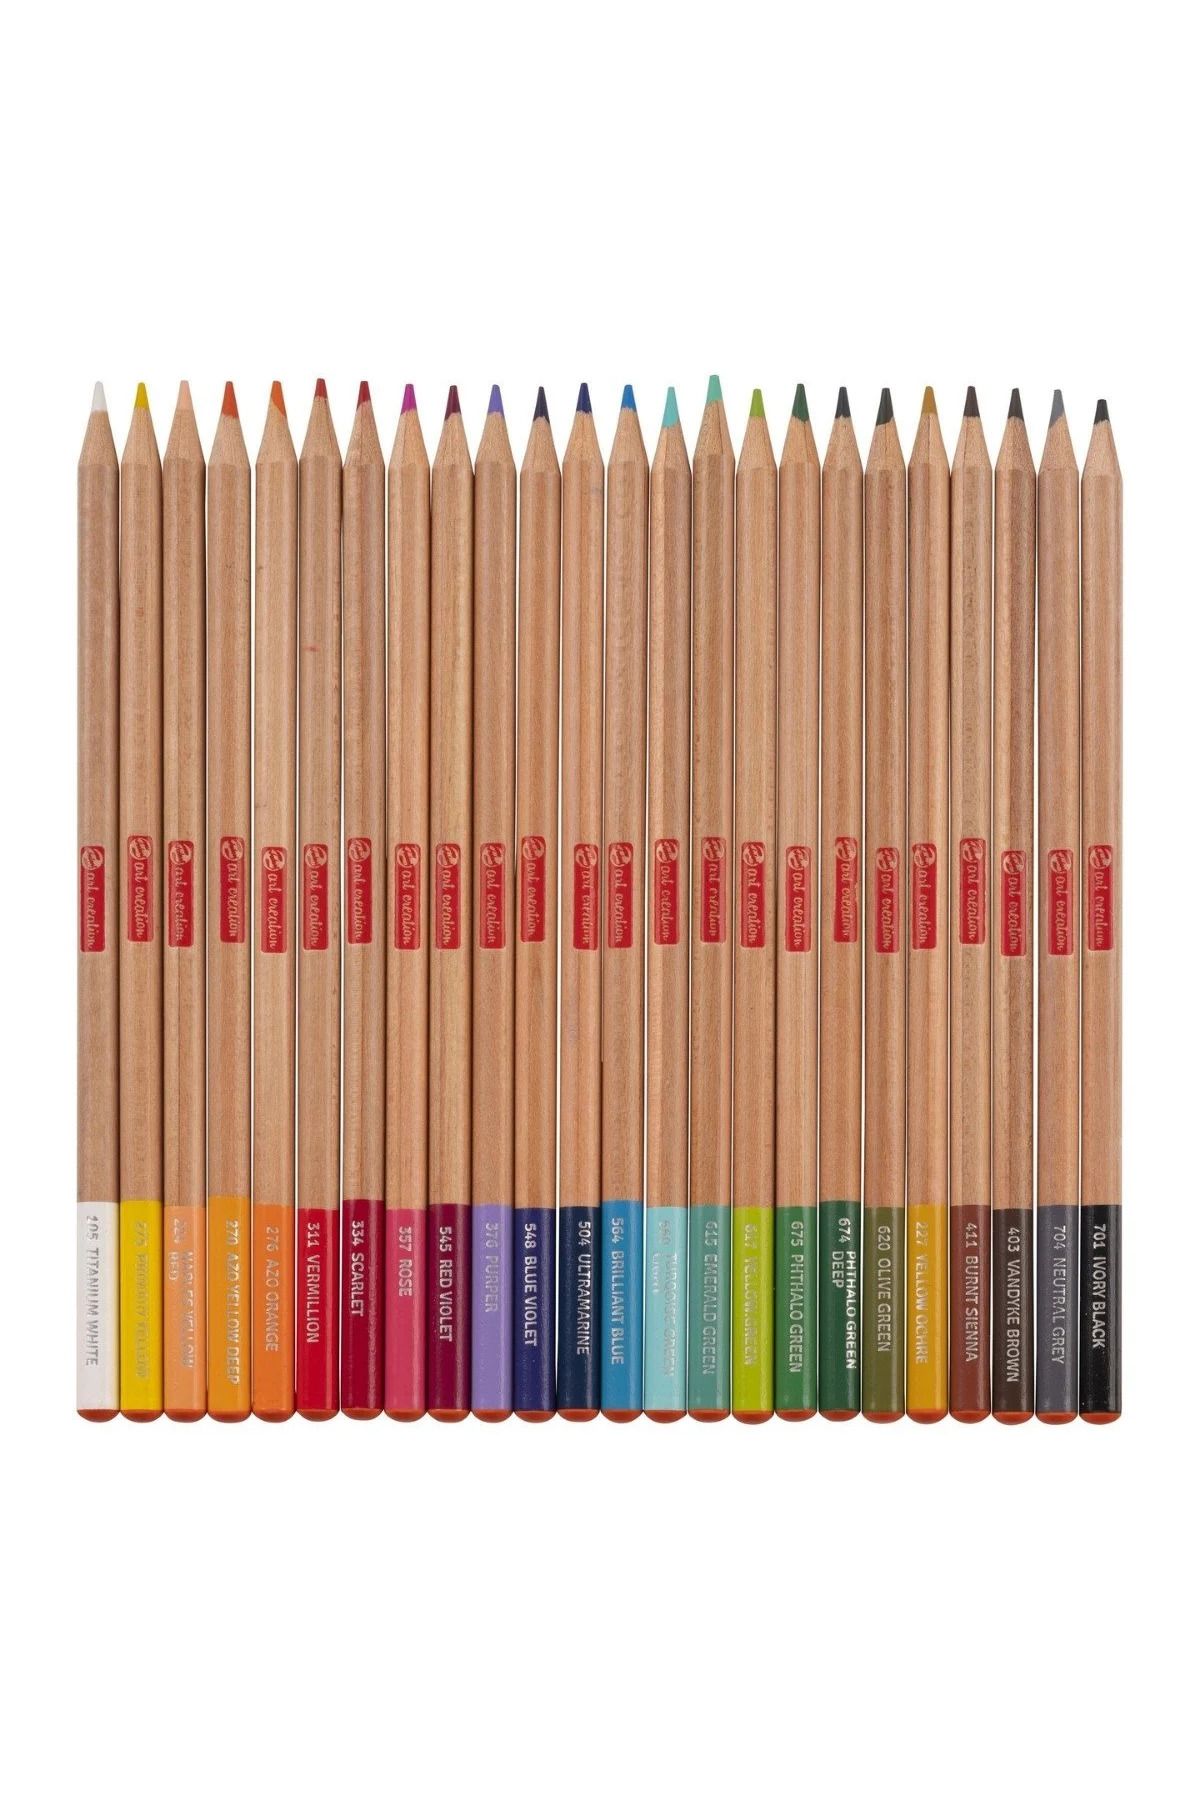 Talens Art Creation Colour Pencils 24'lü Sanatsal Kuru Boya Kalem Seti / 9028024m